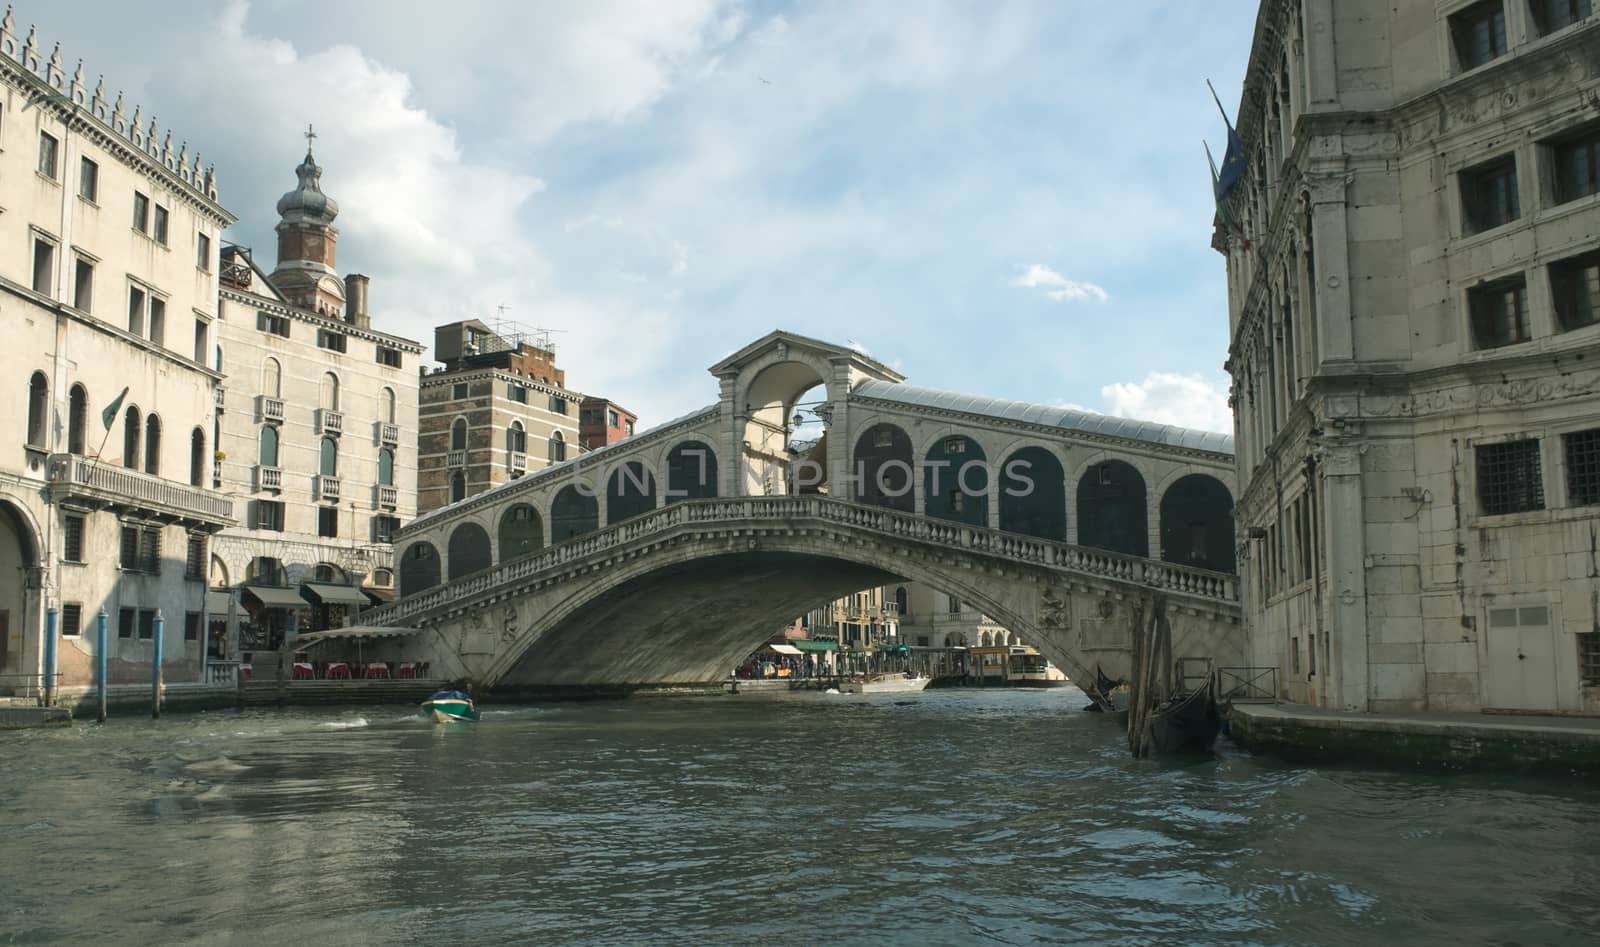 View of the Rialto Bridge in Venice on the Grand Canal